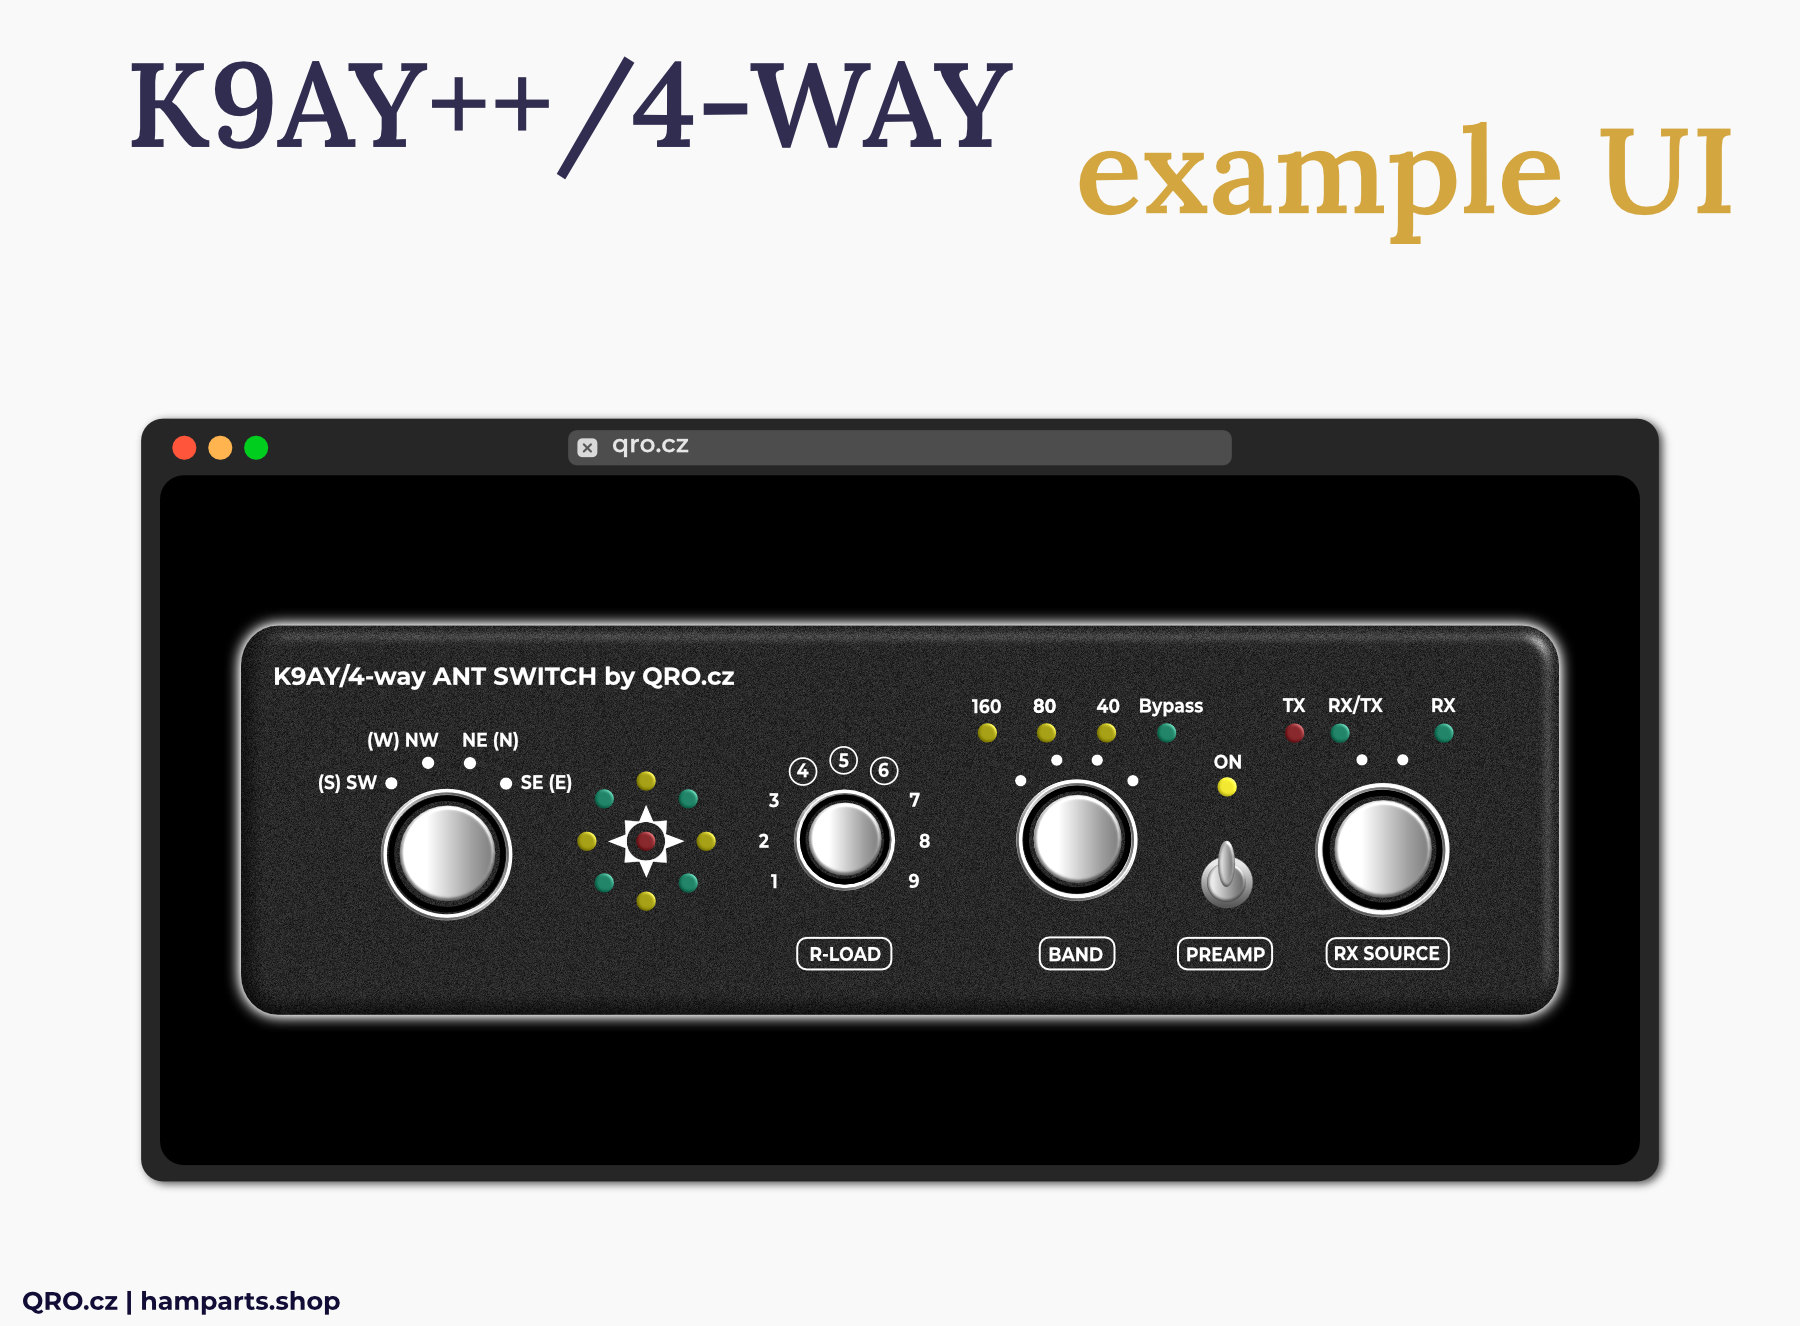 K9AY example remote controller options qro.cz hamparts.shop